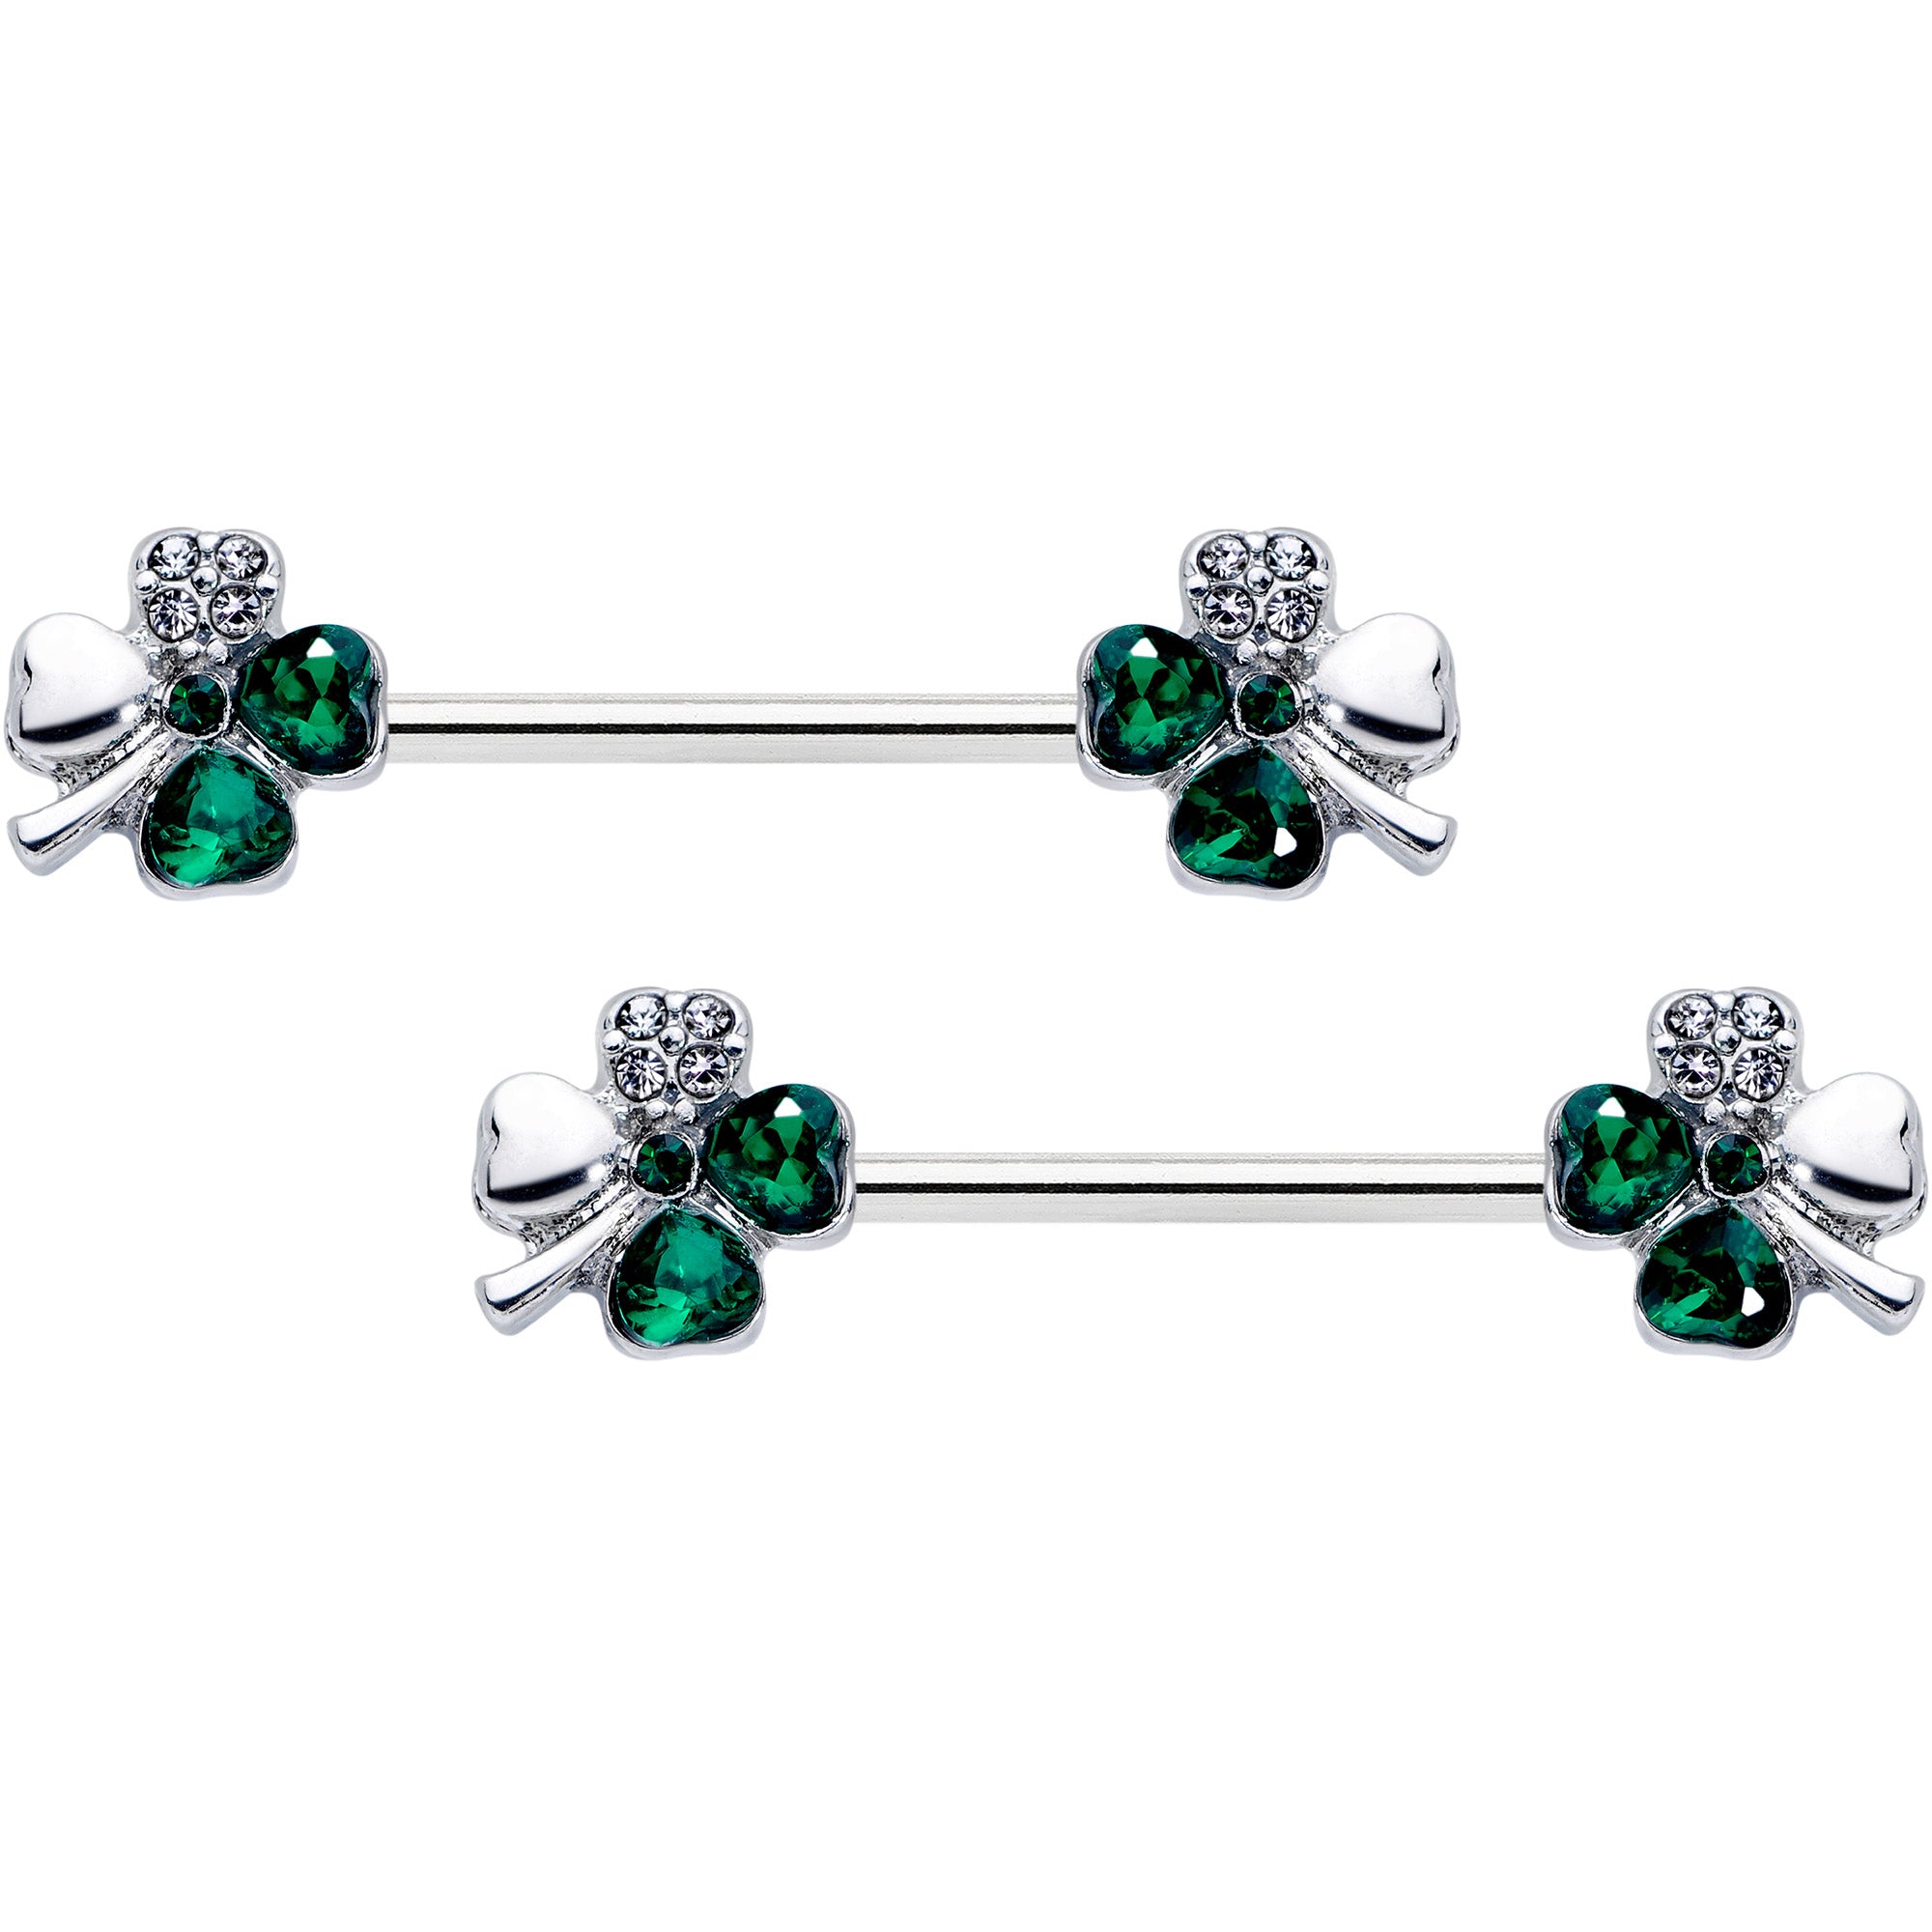  16 Pairs St. Patrick's Day Earrings for Women Shamrock